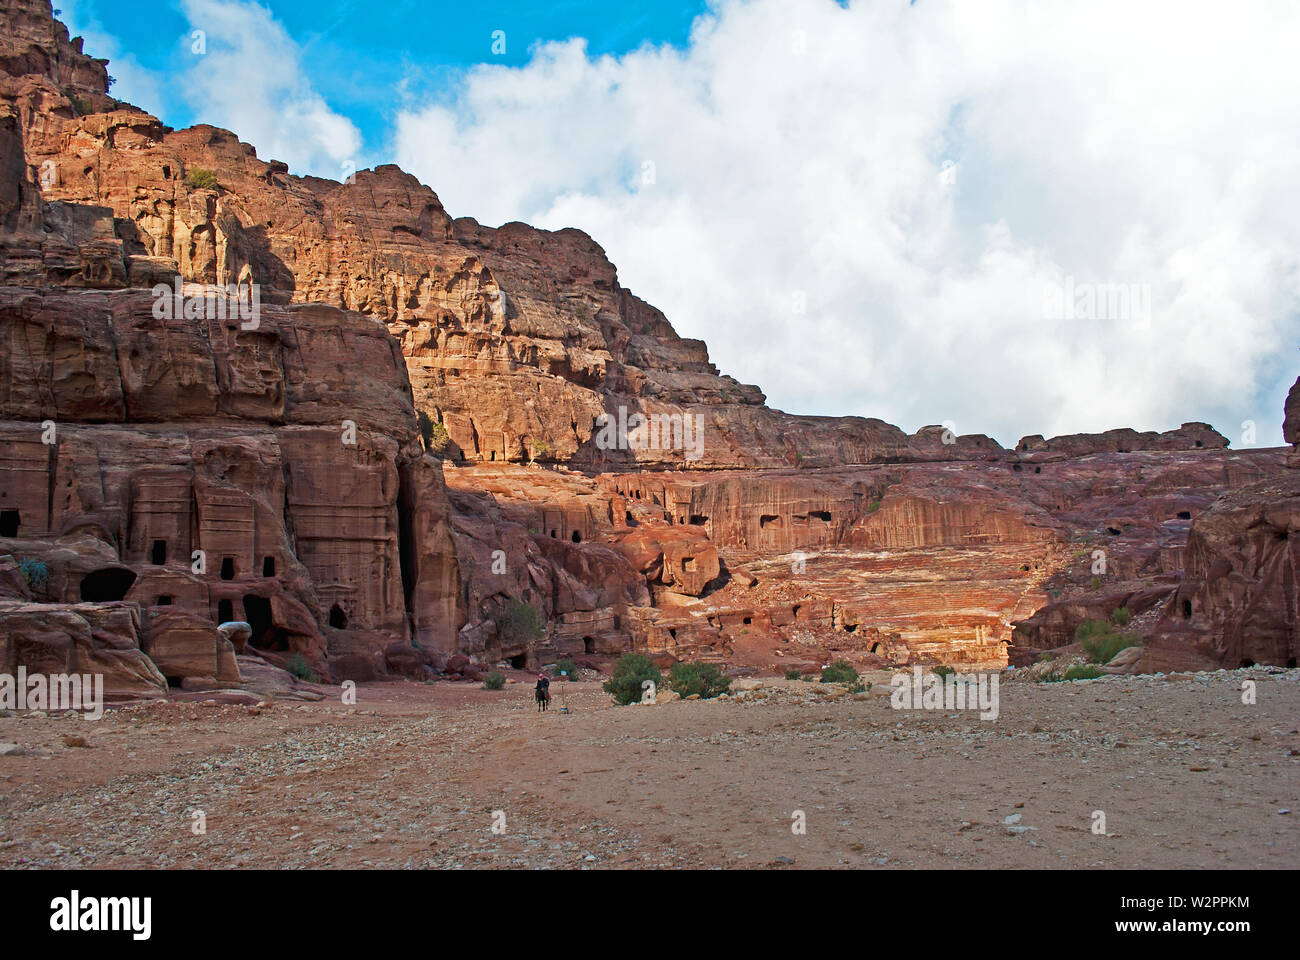 Narrow passage of rocks of Petra canyon in Jordan. UNESCO World Heritage Site. Way through Siq gorge to stone city Petra. Stock Photo